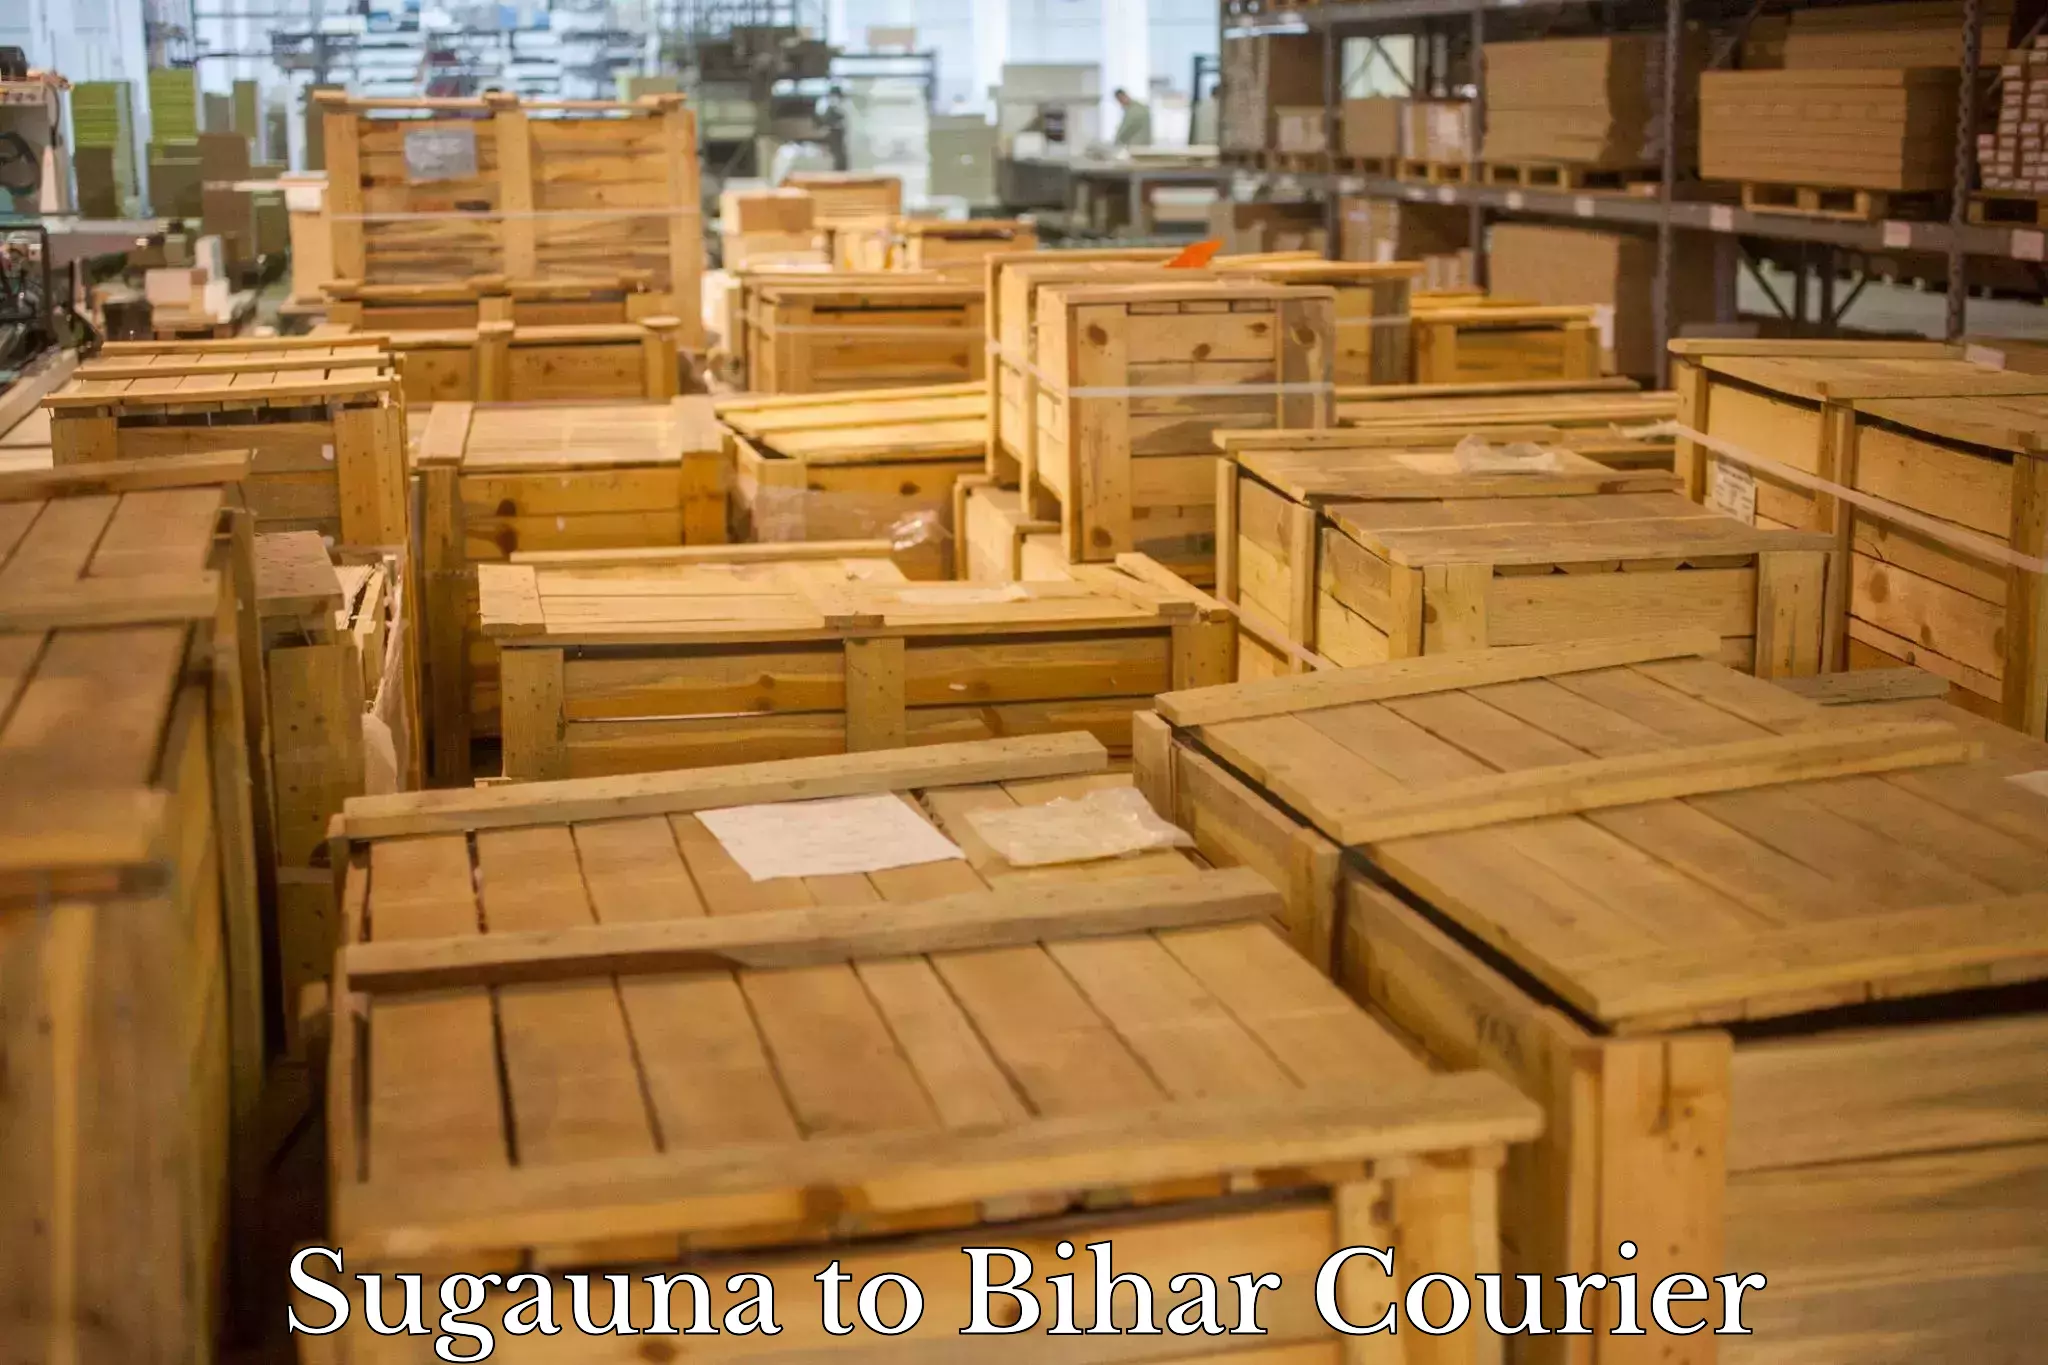 Courier service comparison Sugauna to Barbigha